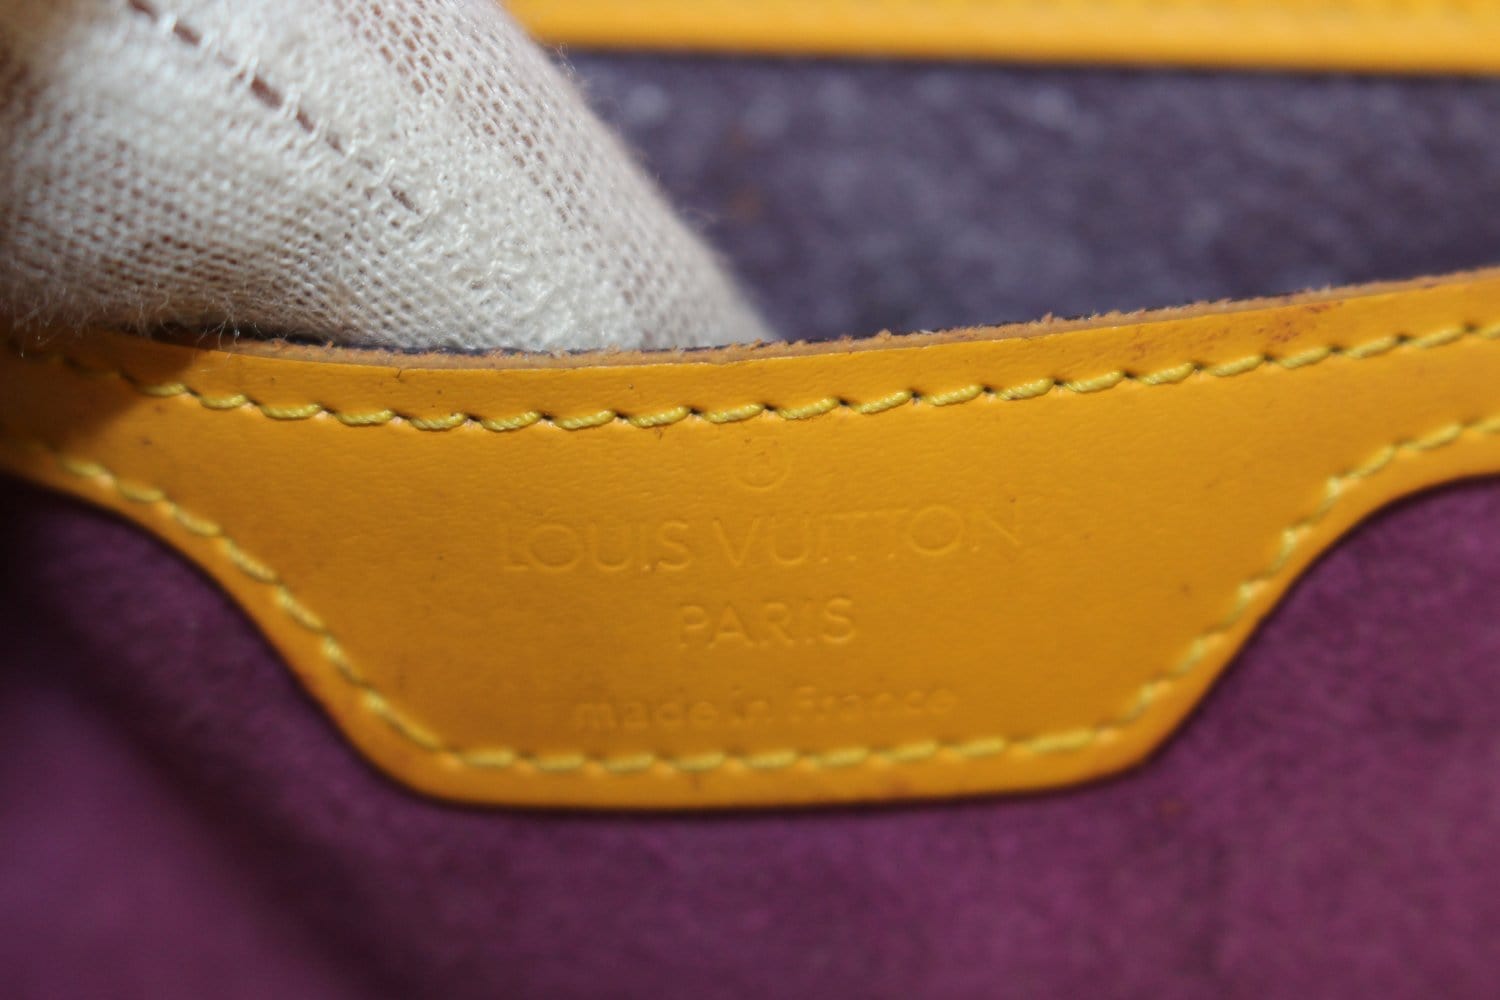 Houston leather handbag Louis Vuitton Yellow in Leather - 25680228